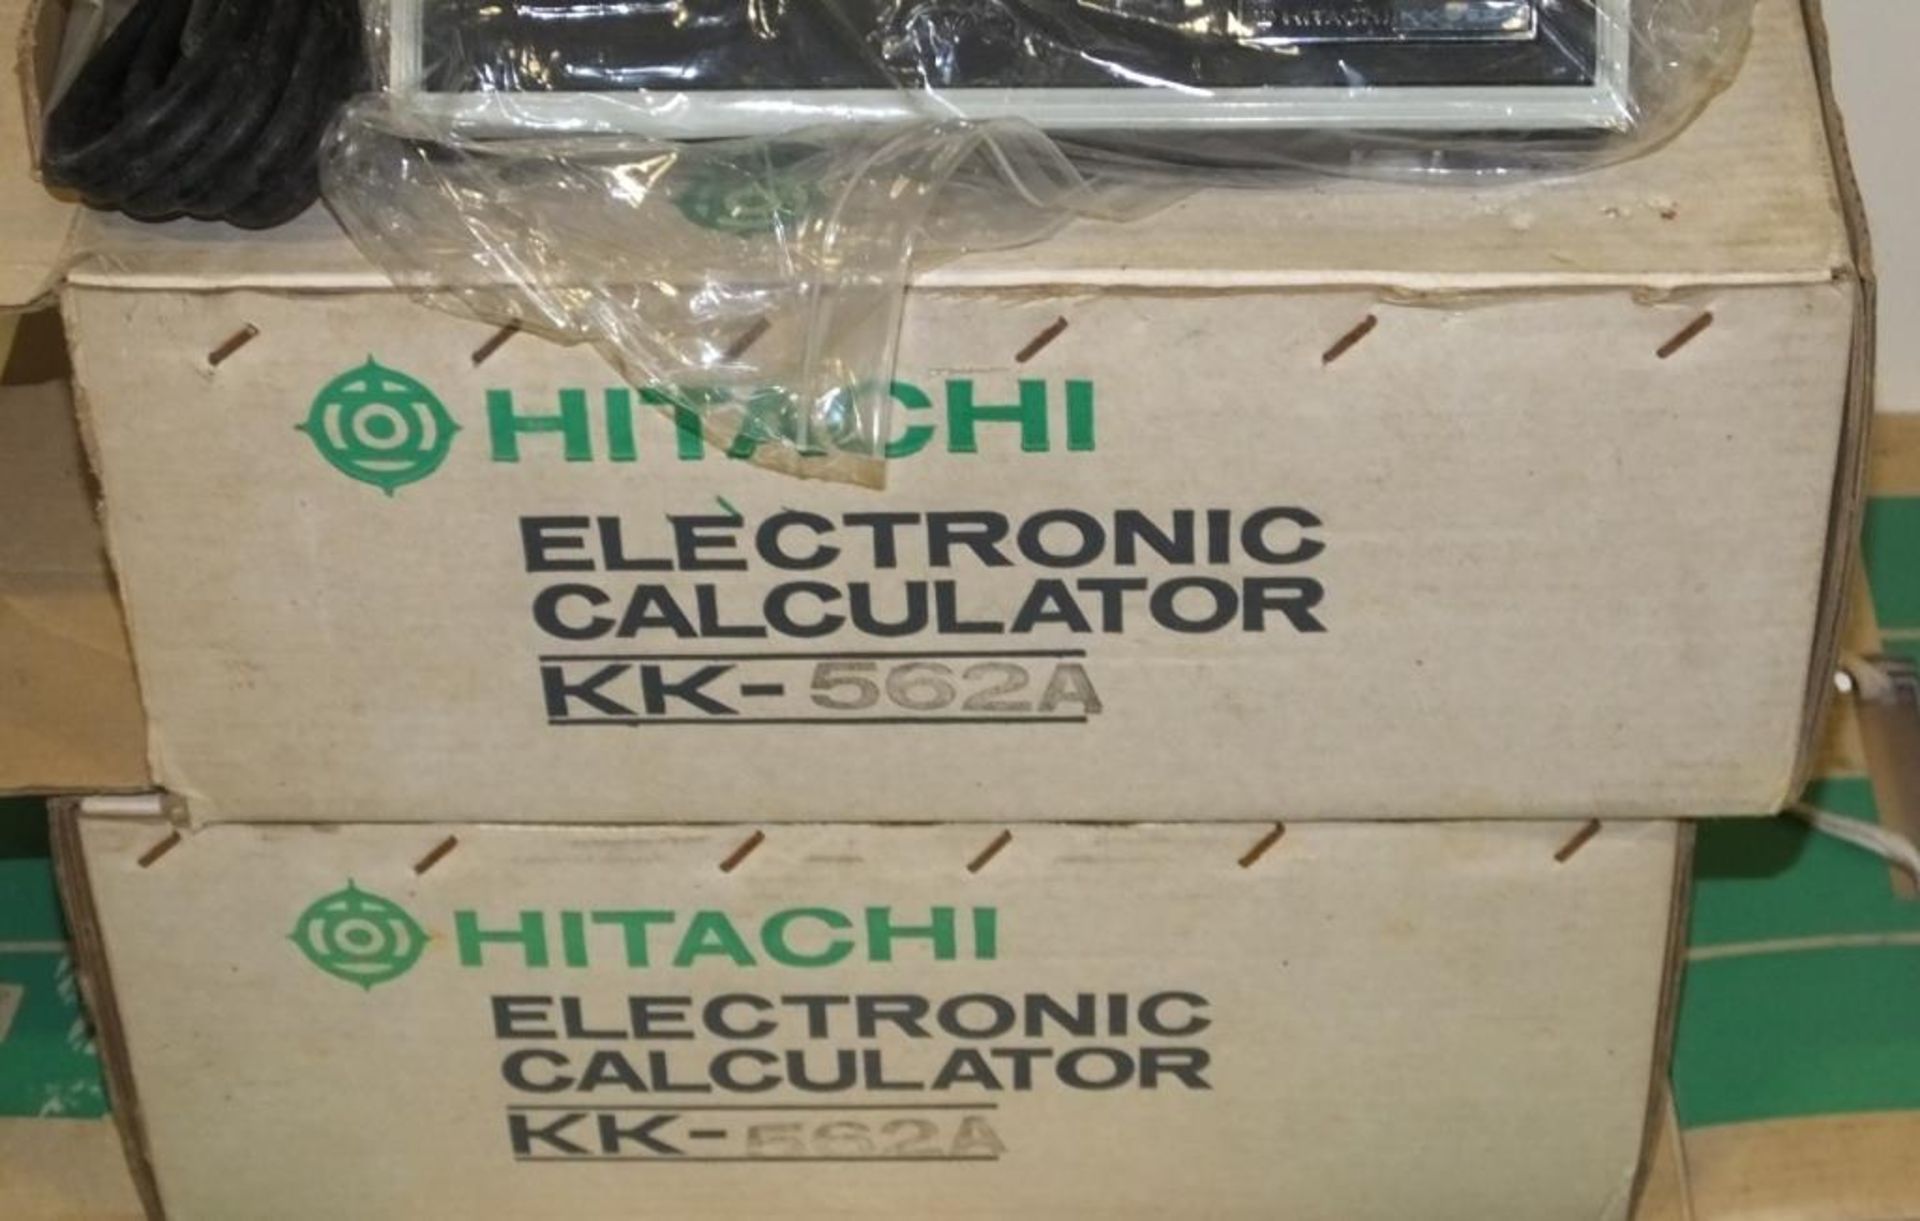 8x Hitachi Electronic Calculators - KK-562A - Image 3 of 3